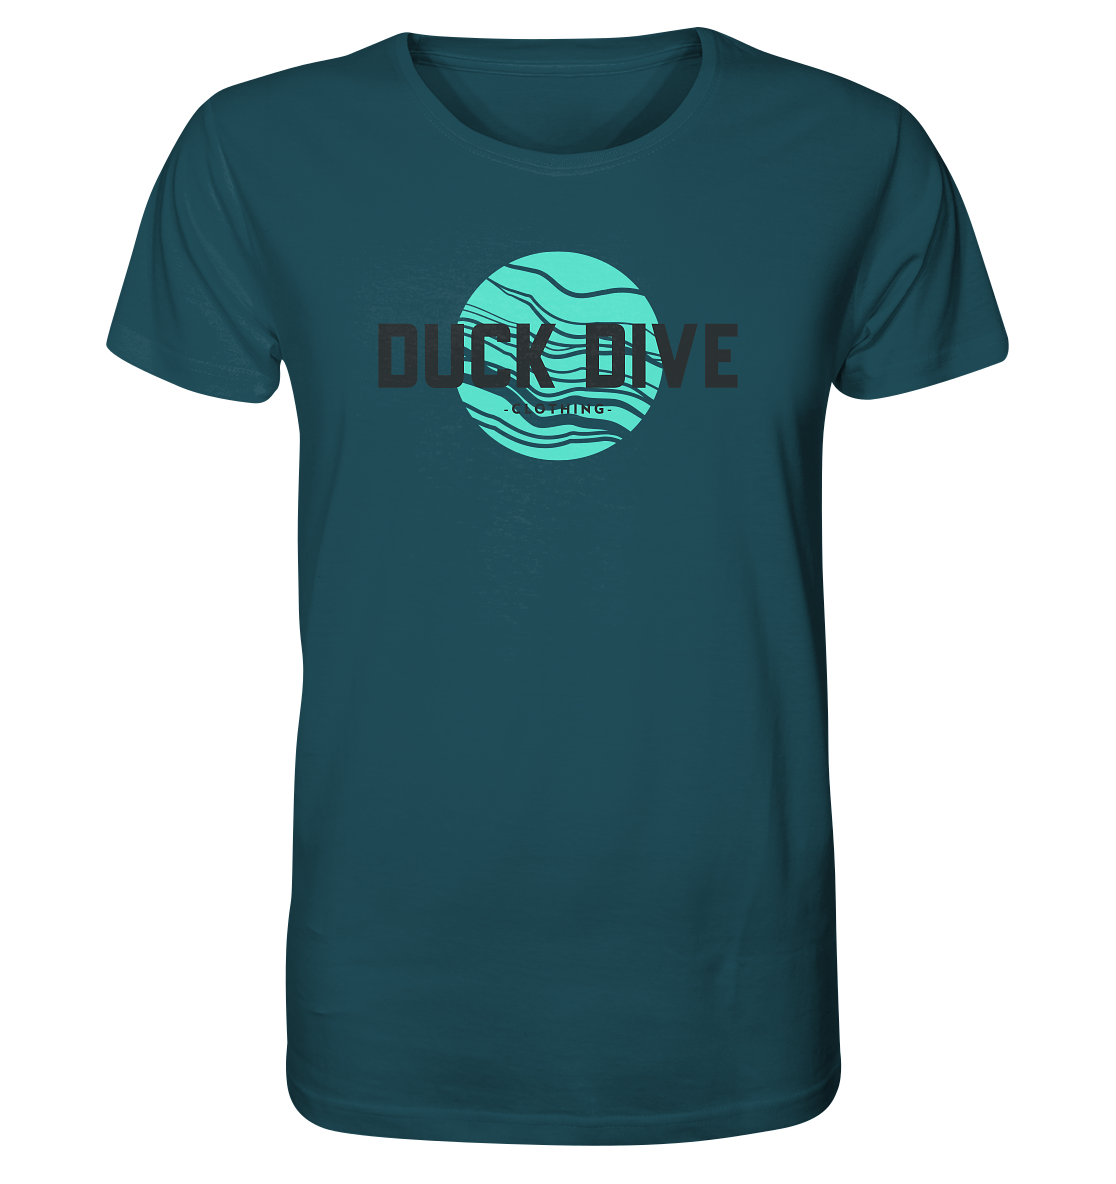 Shirt - Circule Waves - Organic Shirt - Duck Dive Clothing